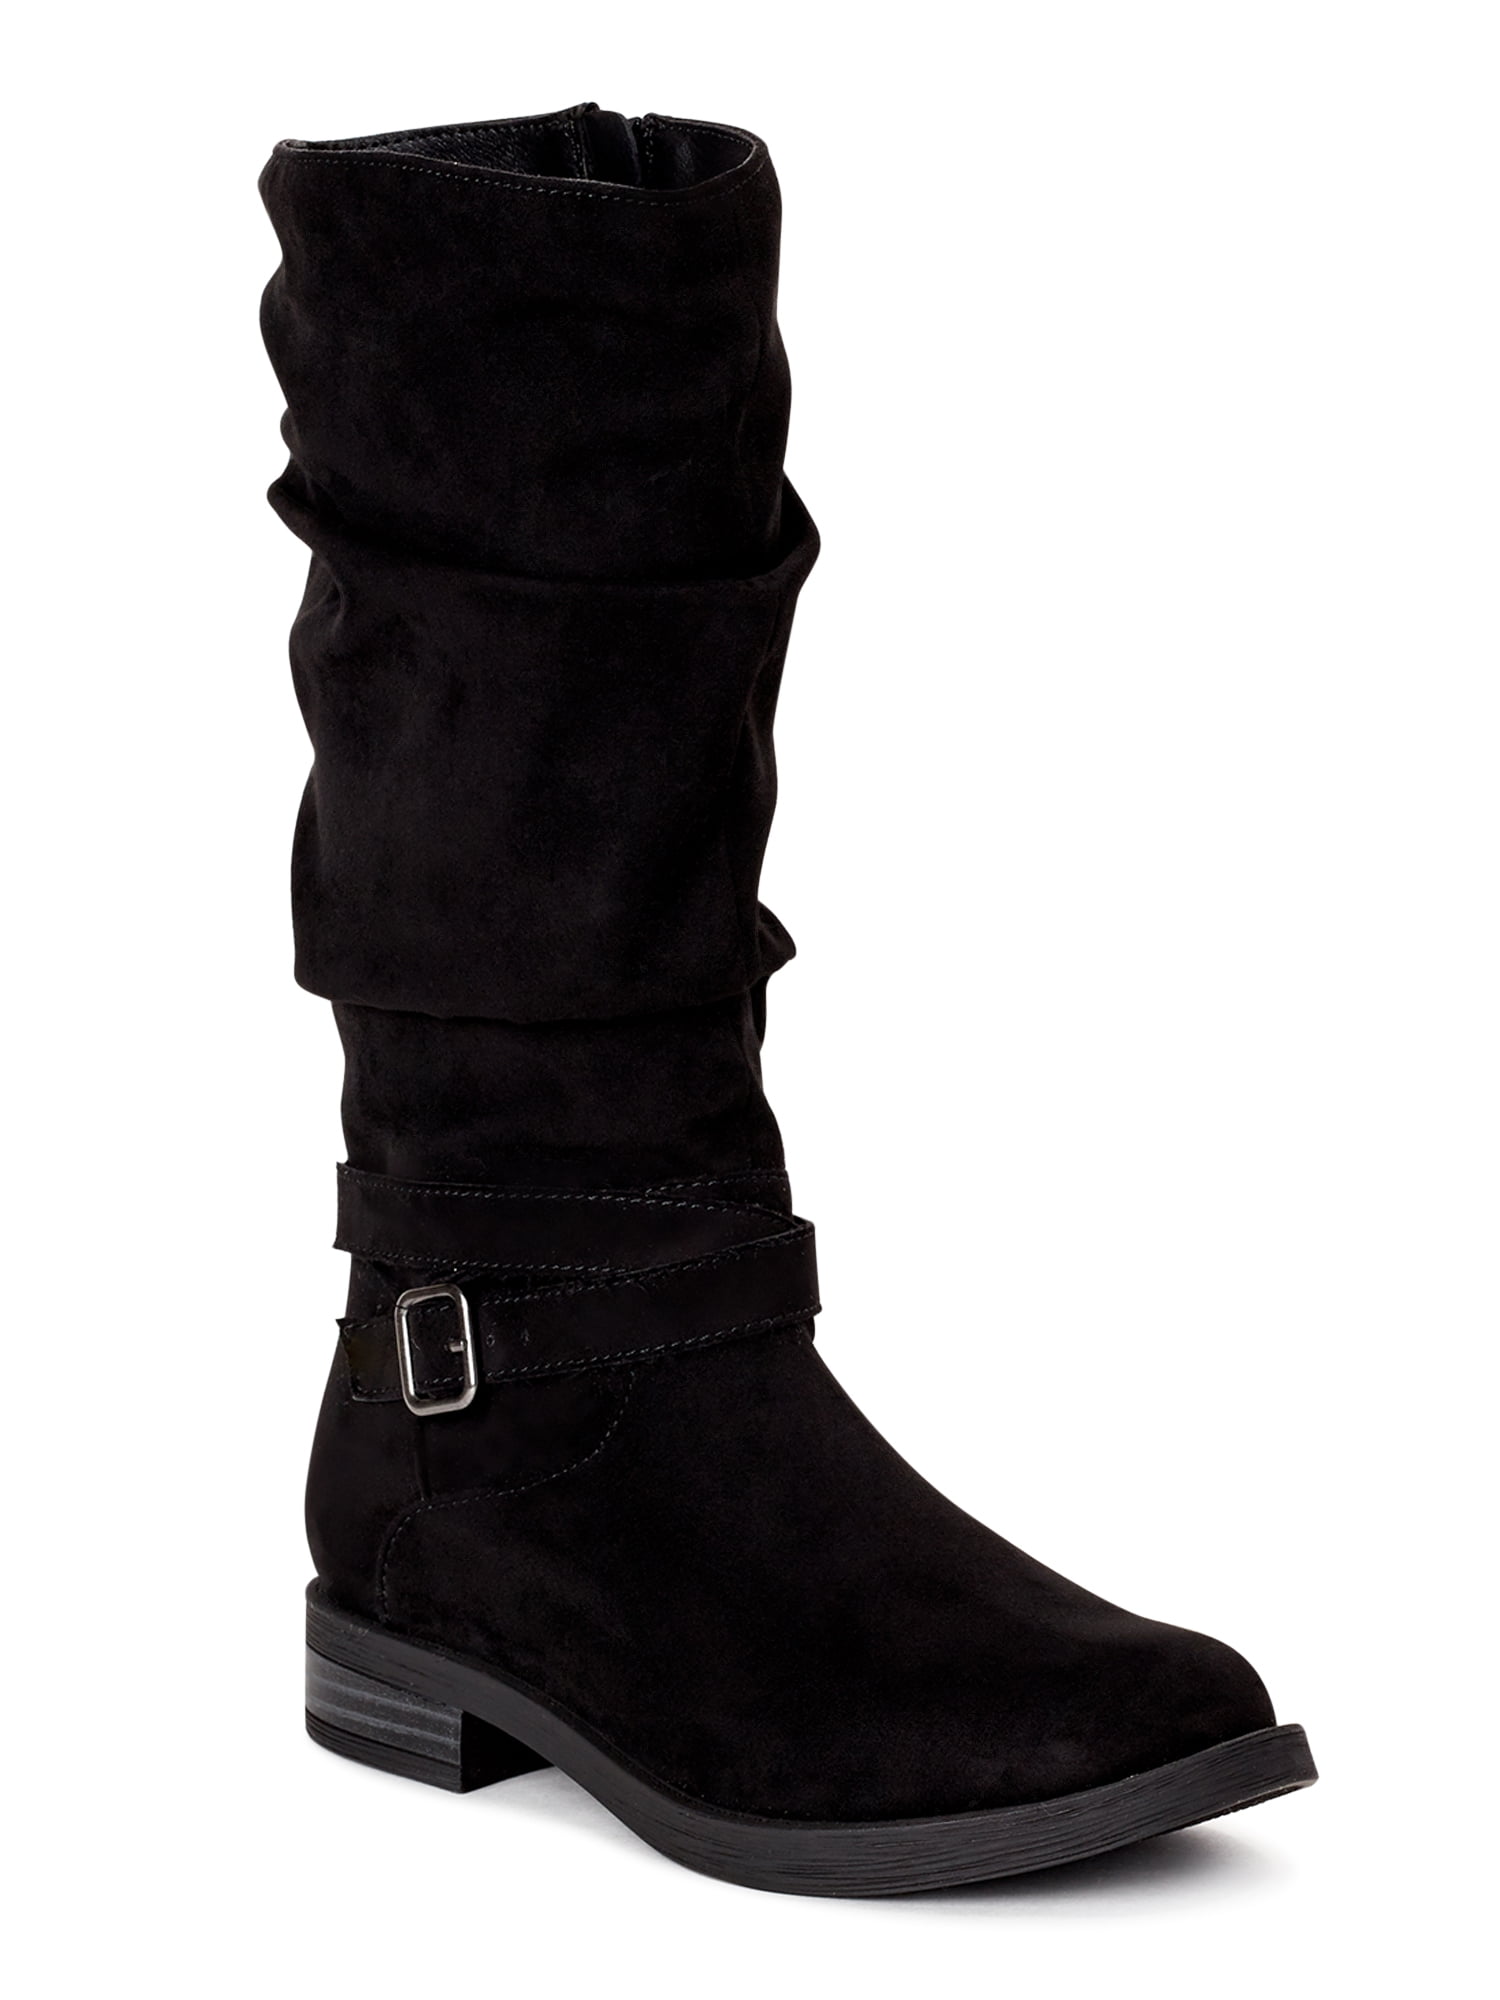 black boots for little girls